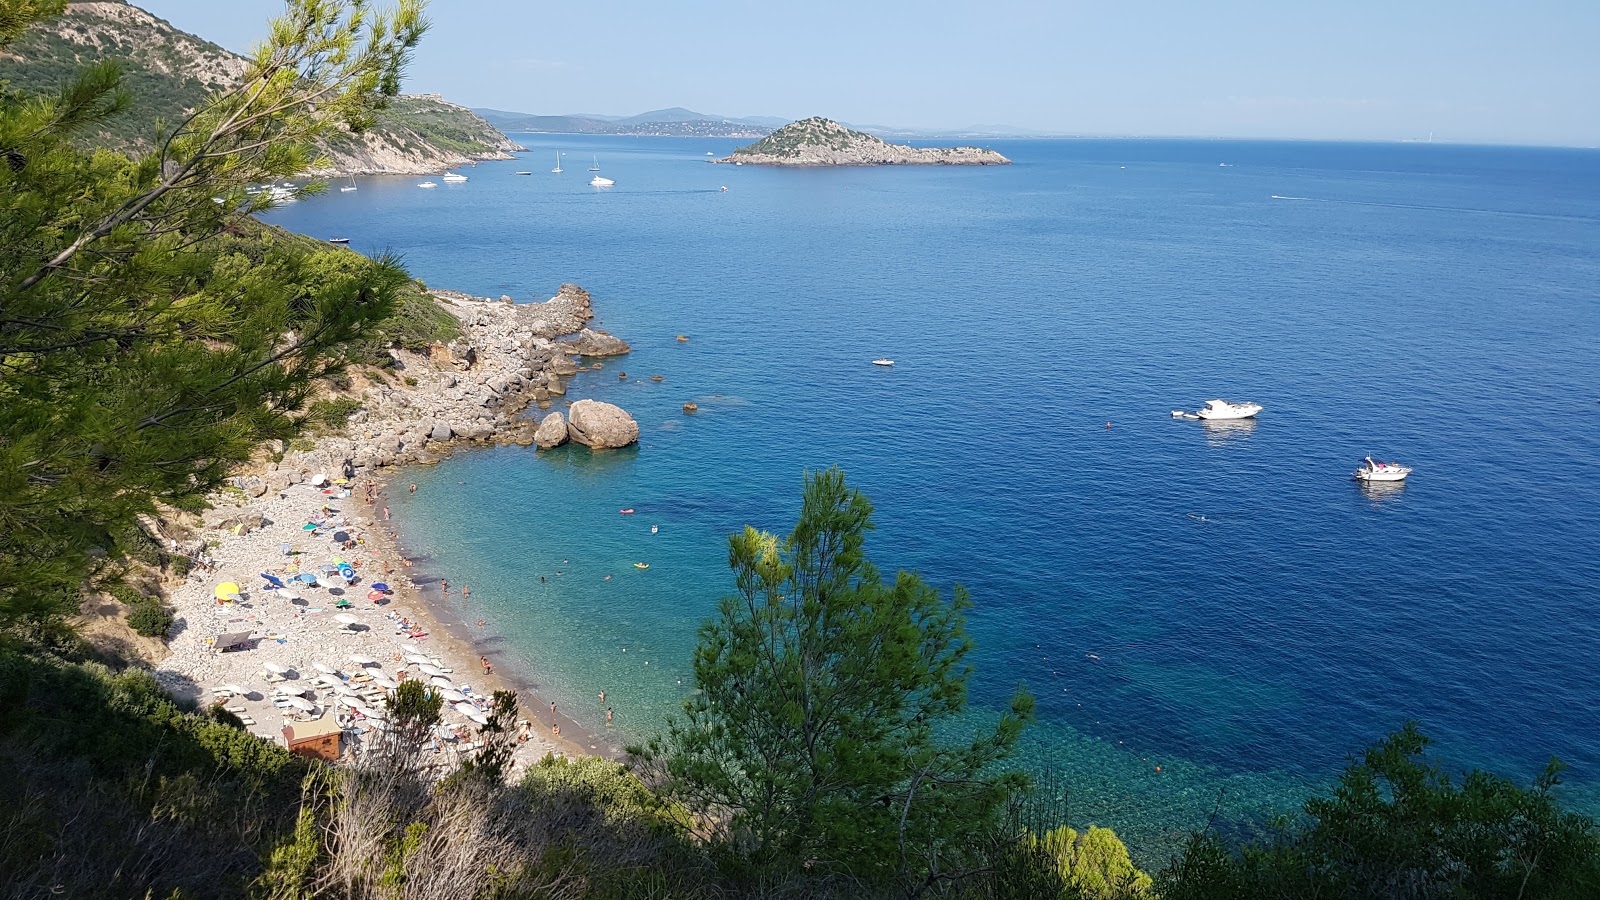 Spiaggia Acqua Dolce的照片 带有岩石覆盖表面